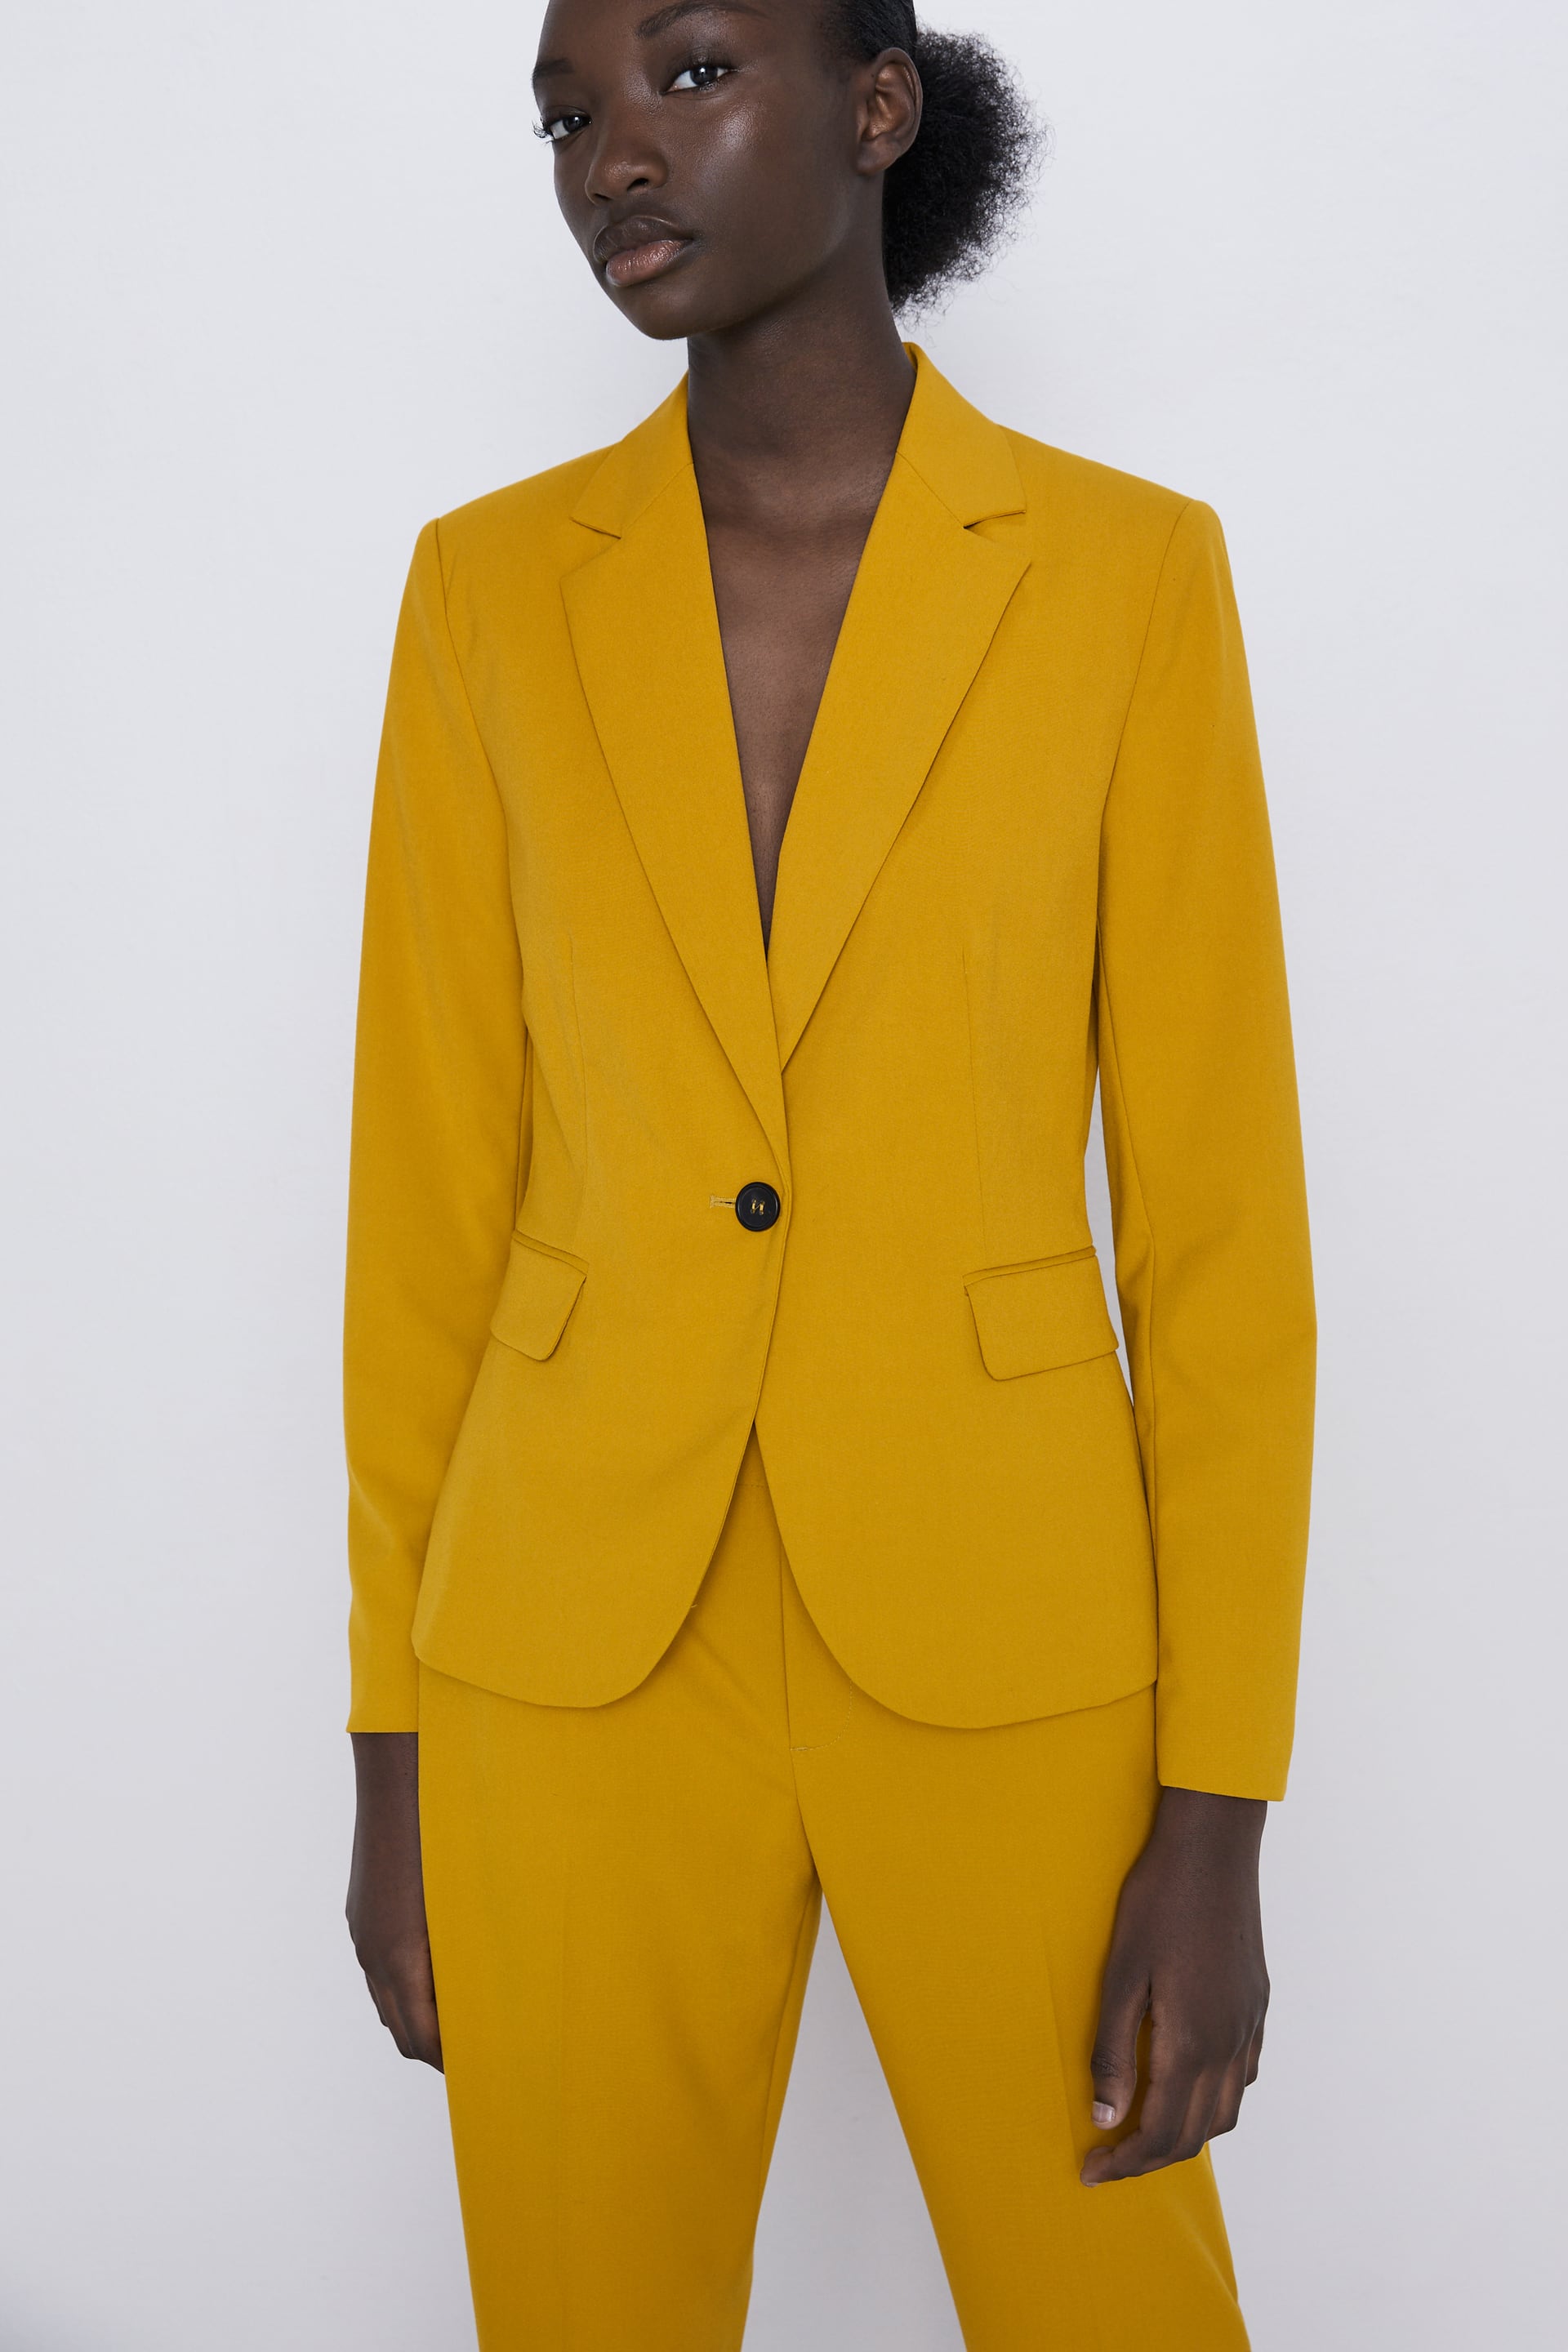 yellow suit zara